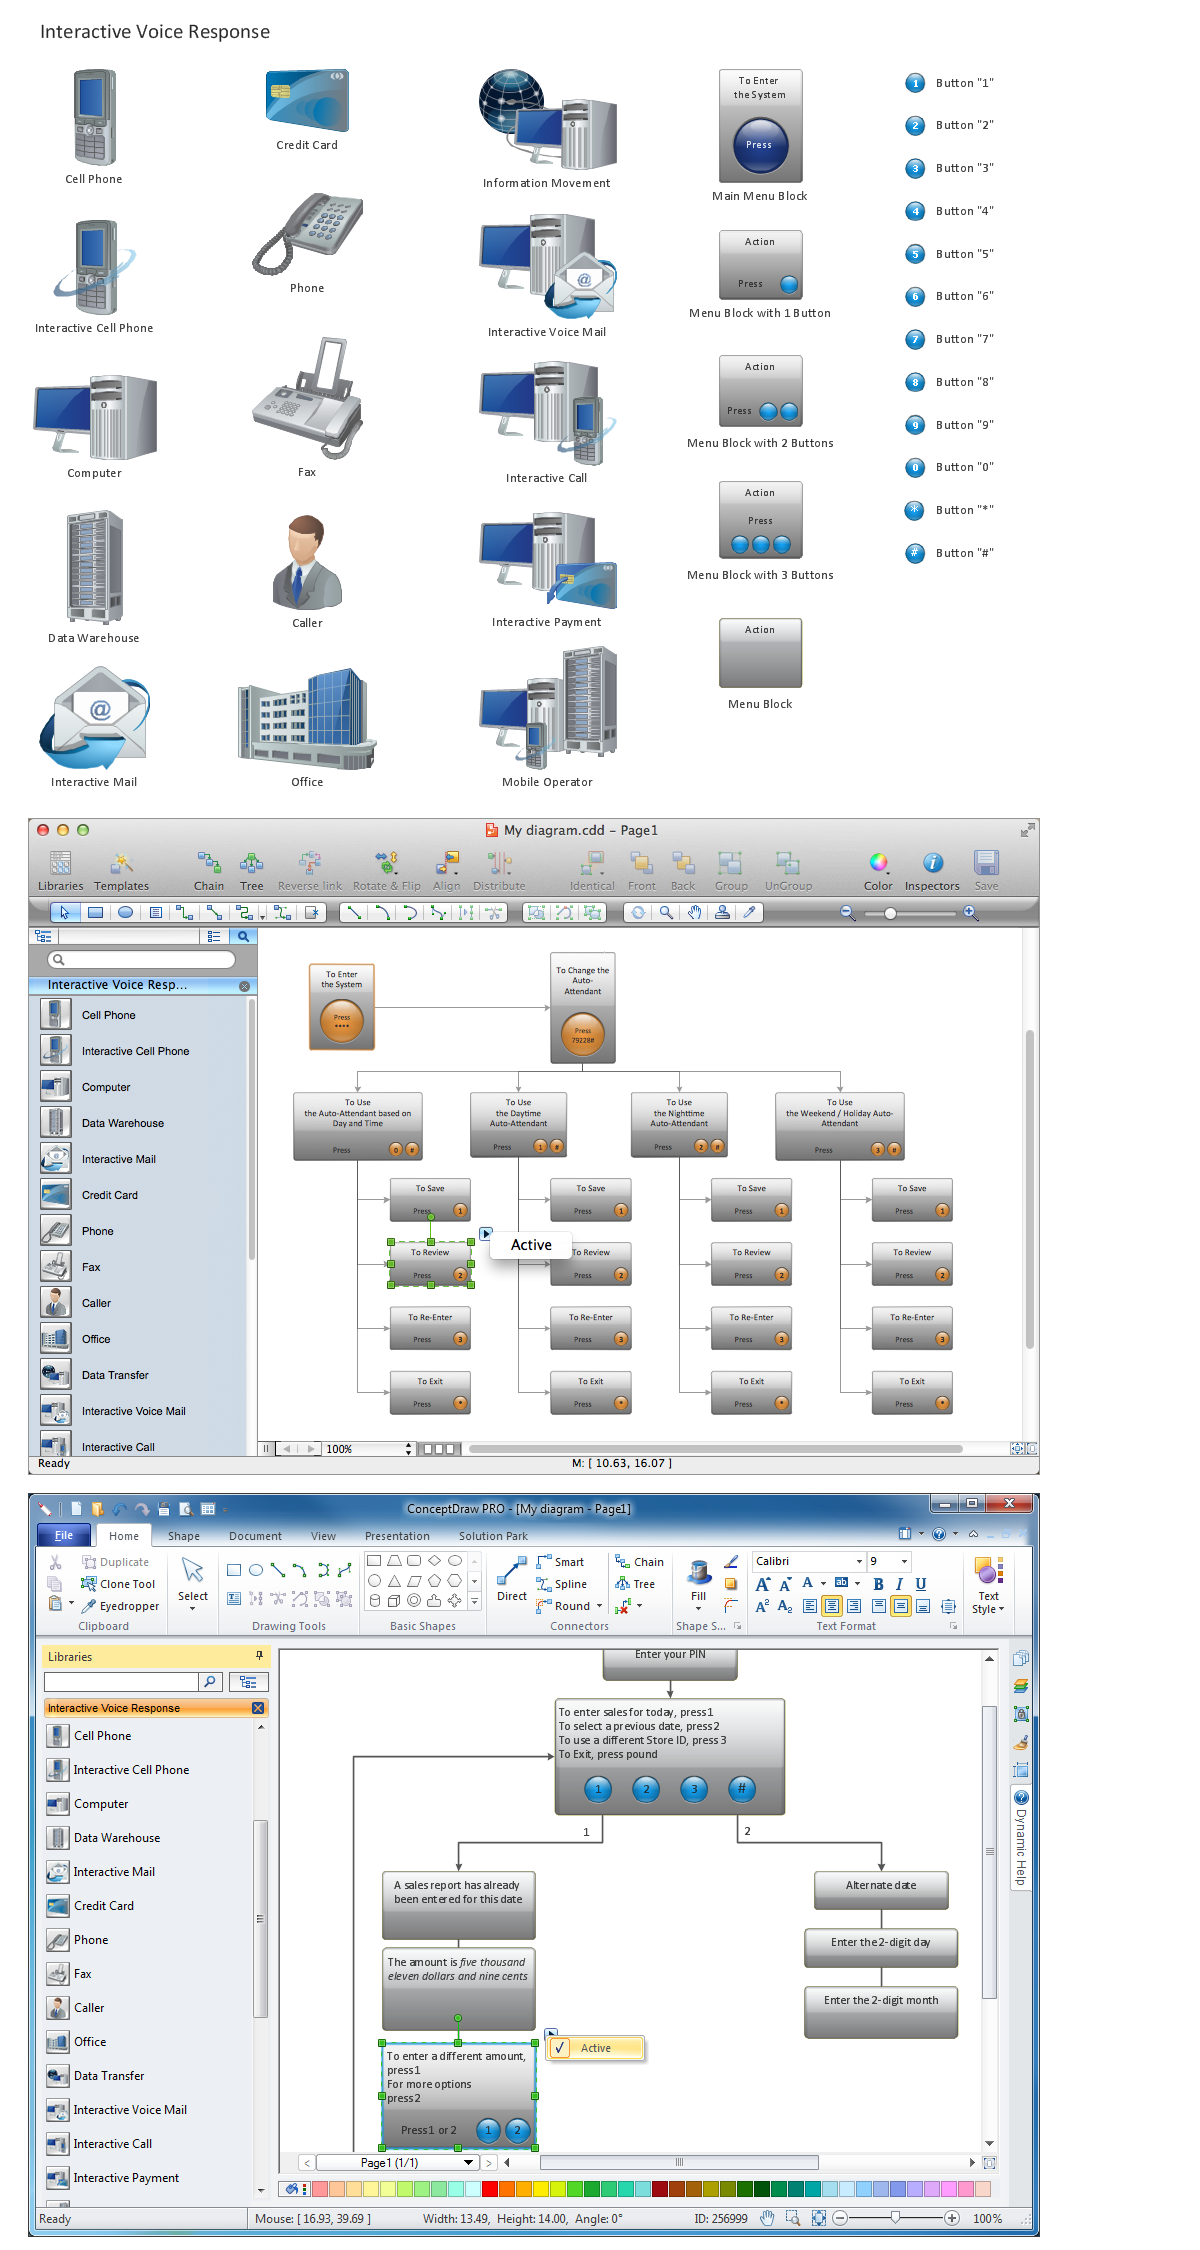 Network Diagramming Software, Design Elements - IVR (Windows, Macintosh)